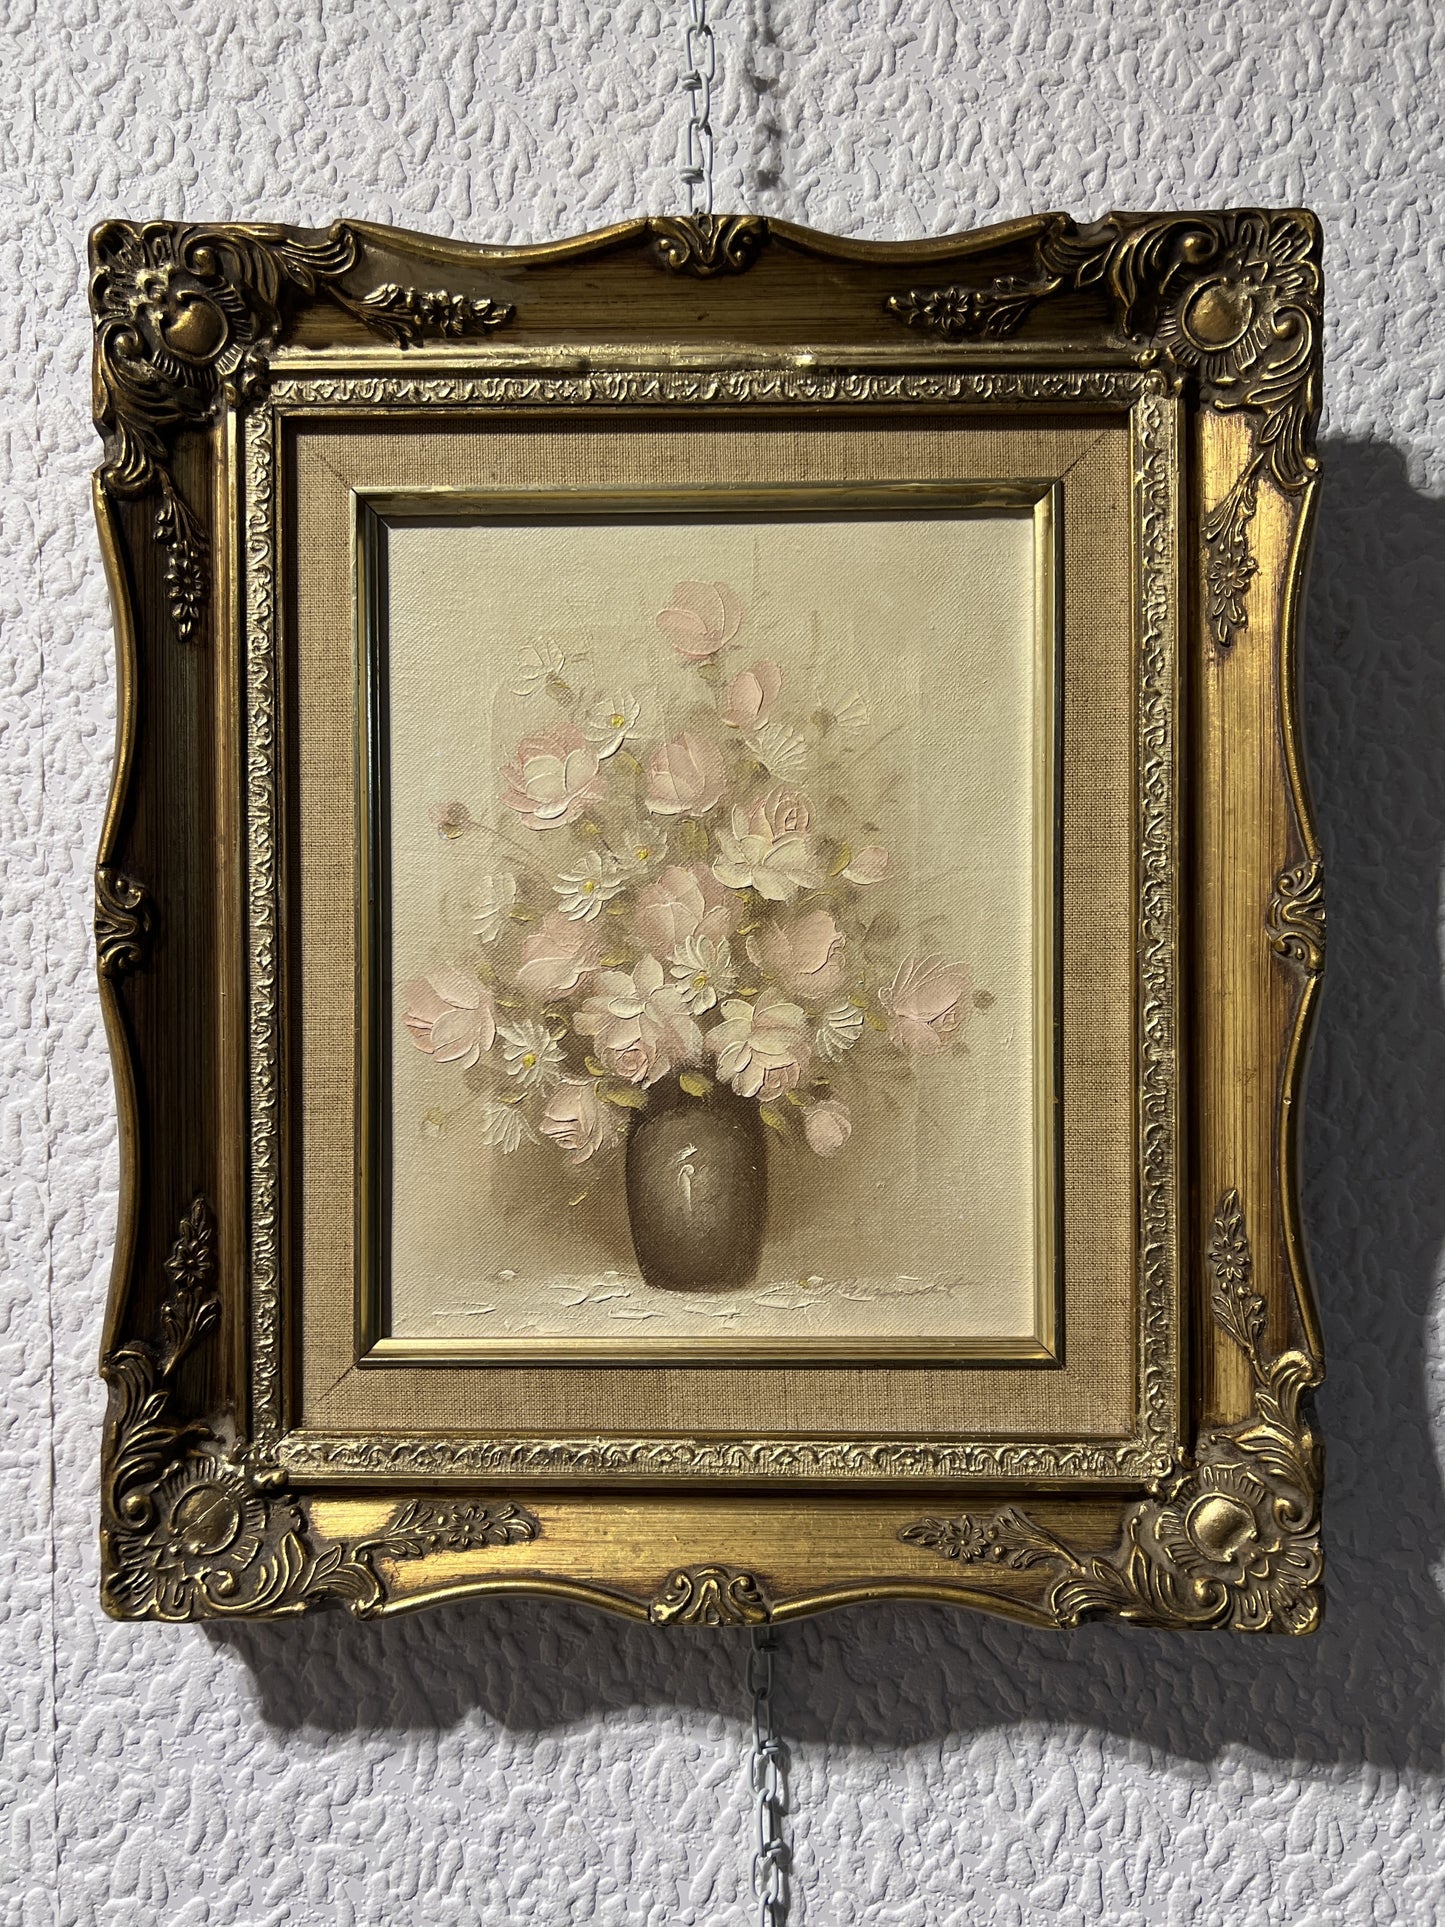 Original Painting on Canvas Still Life, Flowers, Framed, Signed